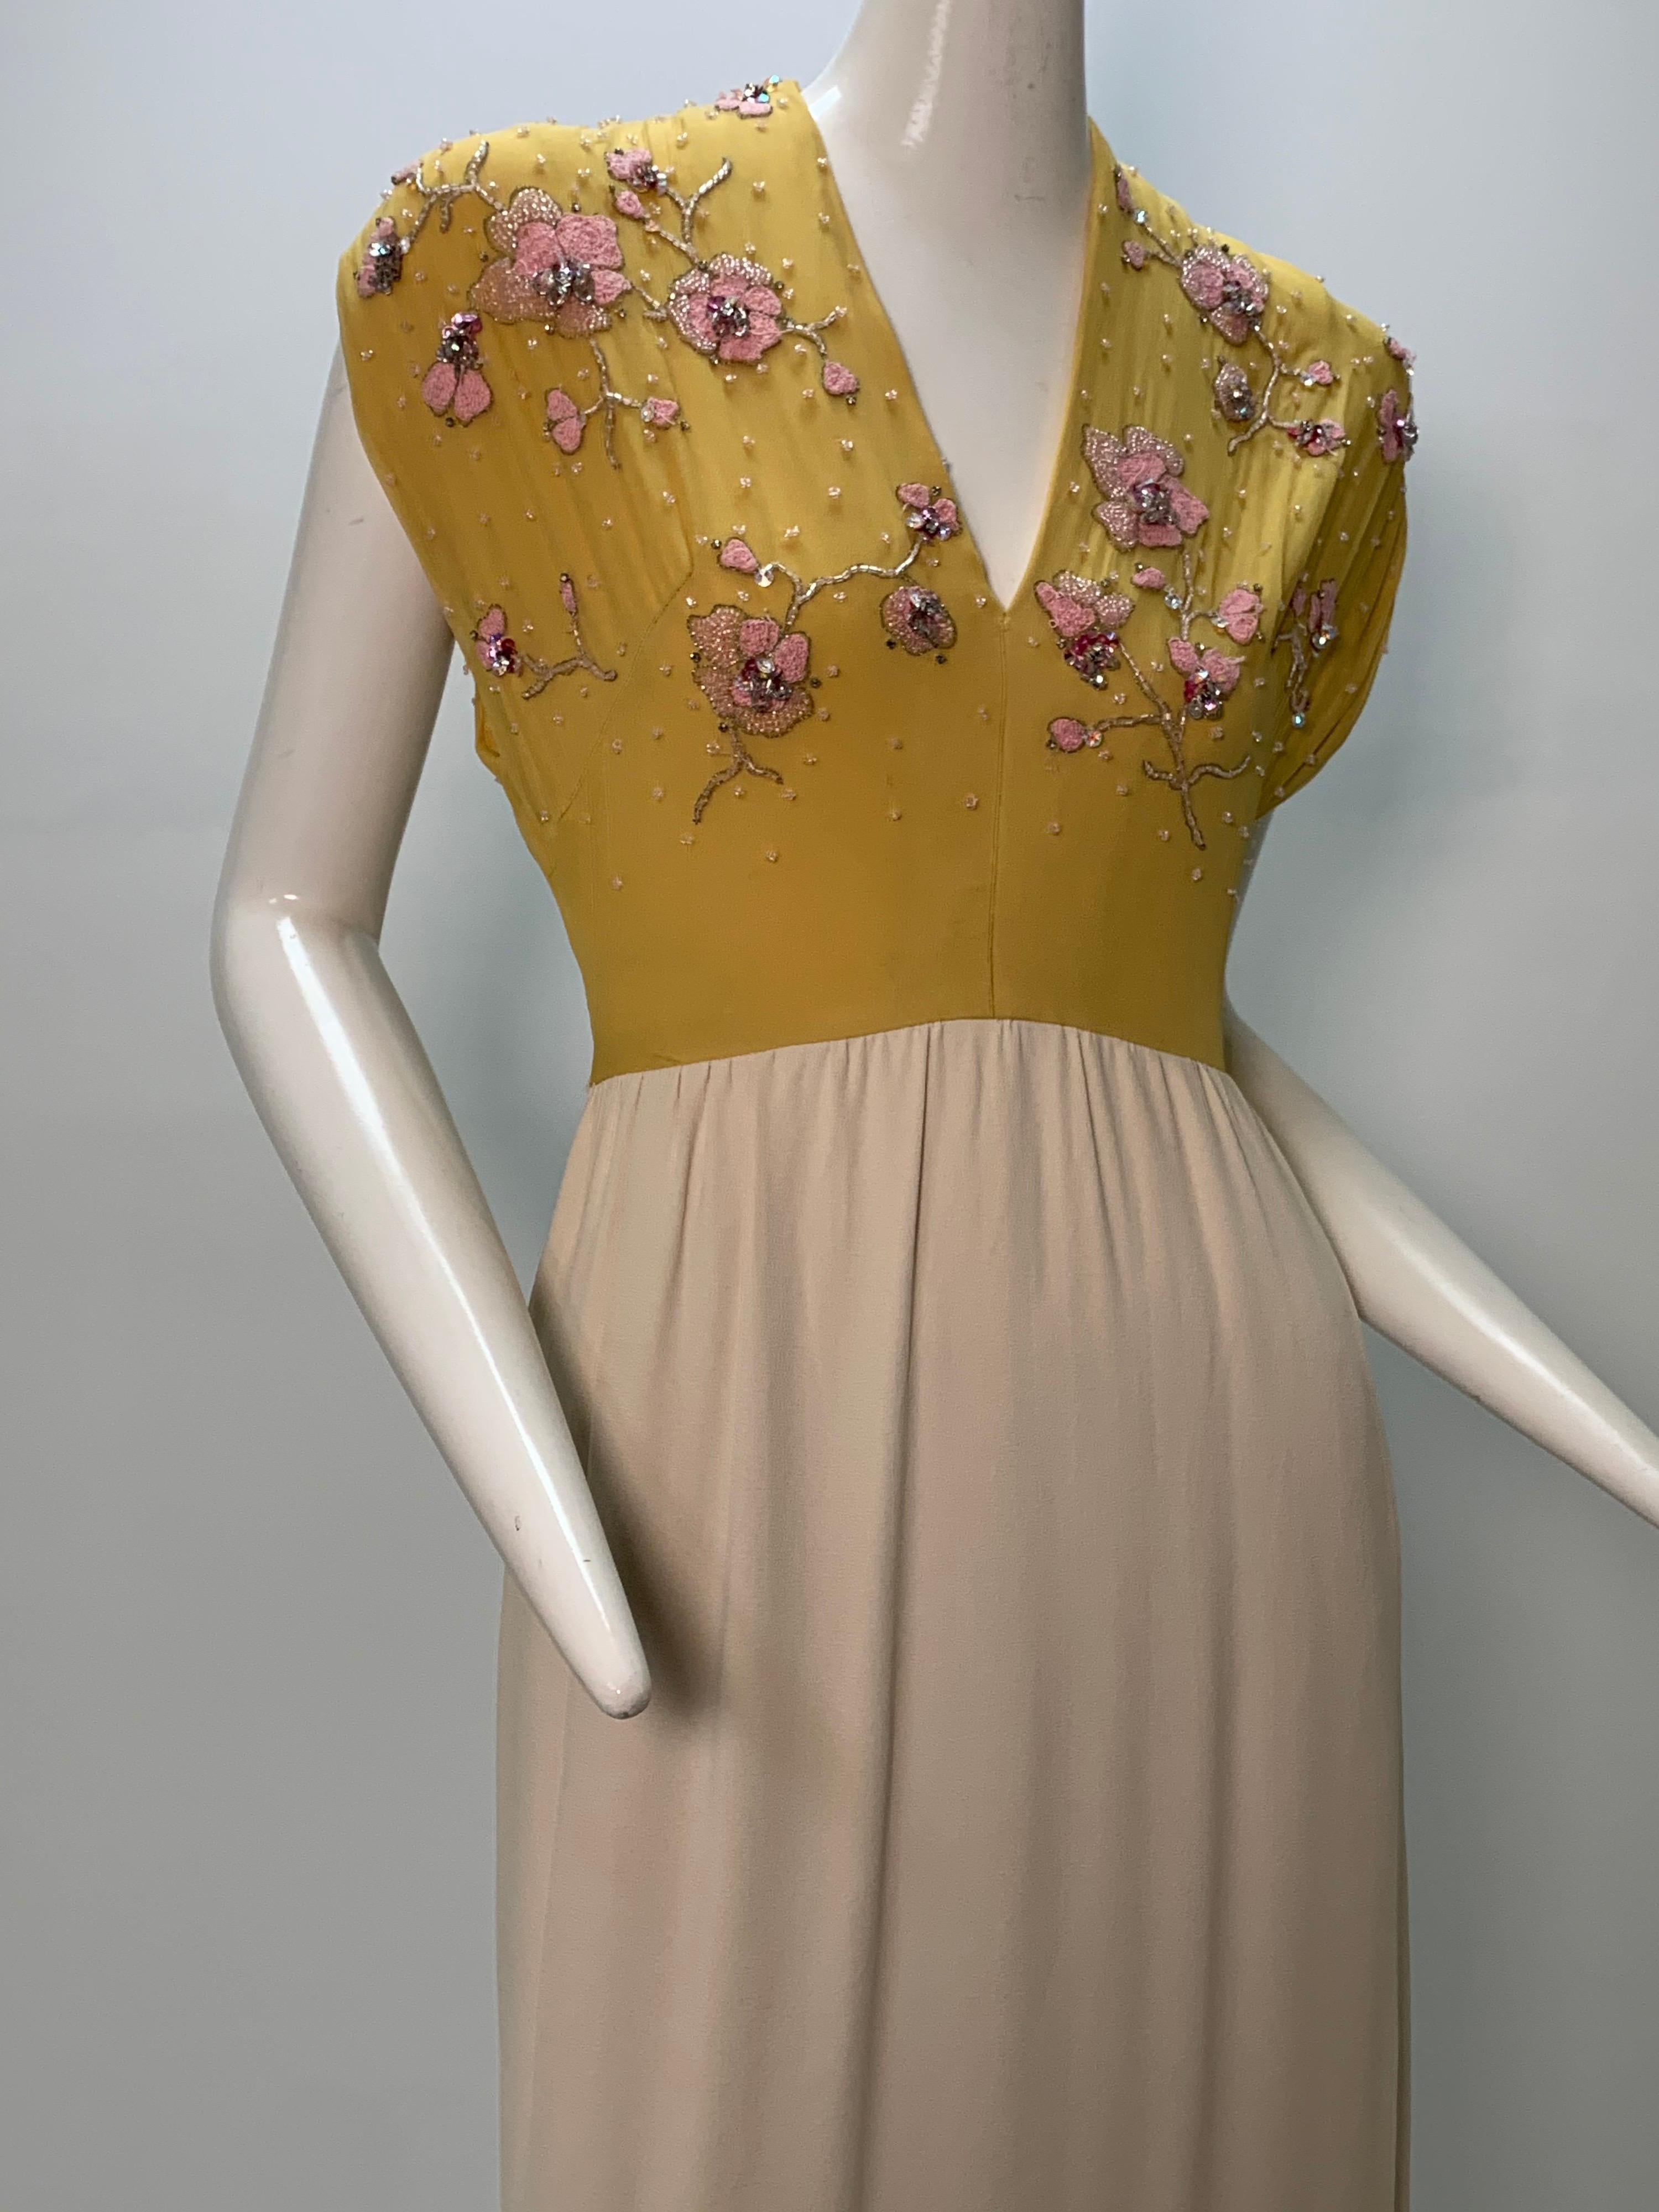 1960s John Hogan Crepe Dress w/ Mustard Floral Embroidered Bodice & Cream Skirt For Sale 8